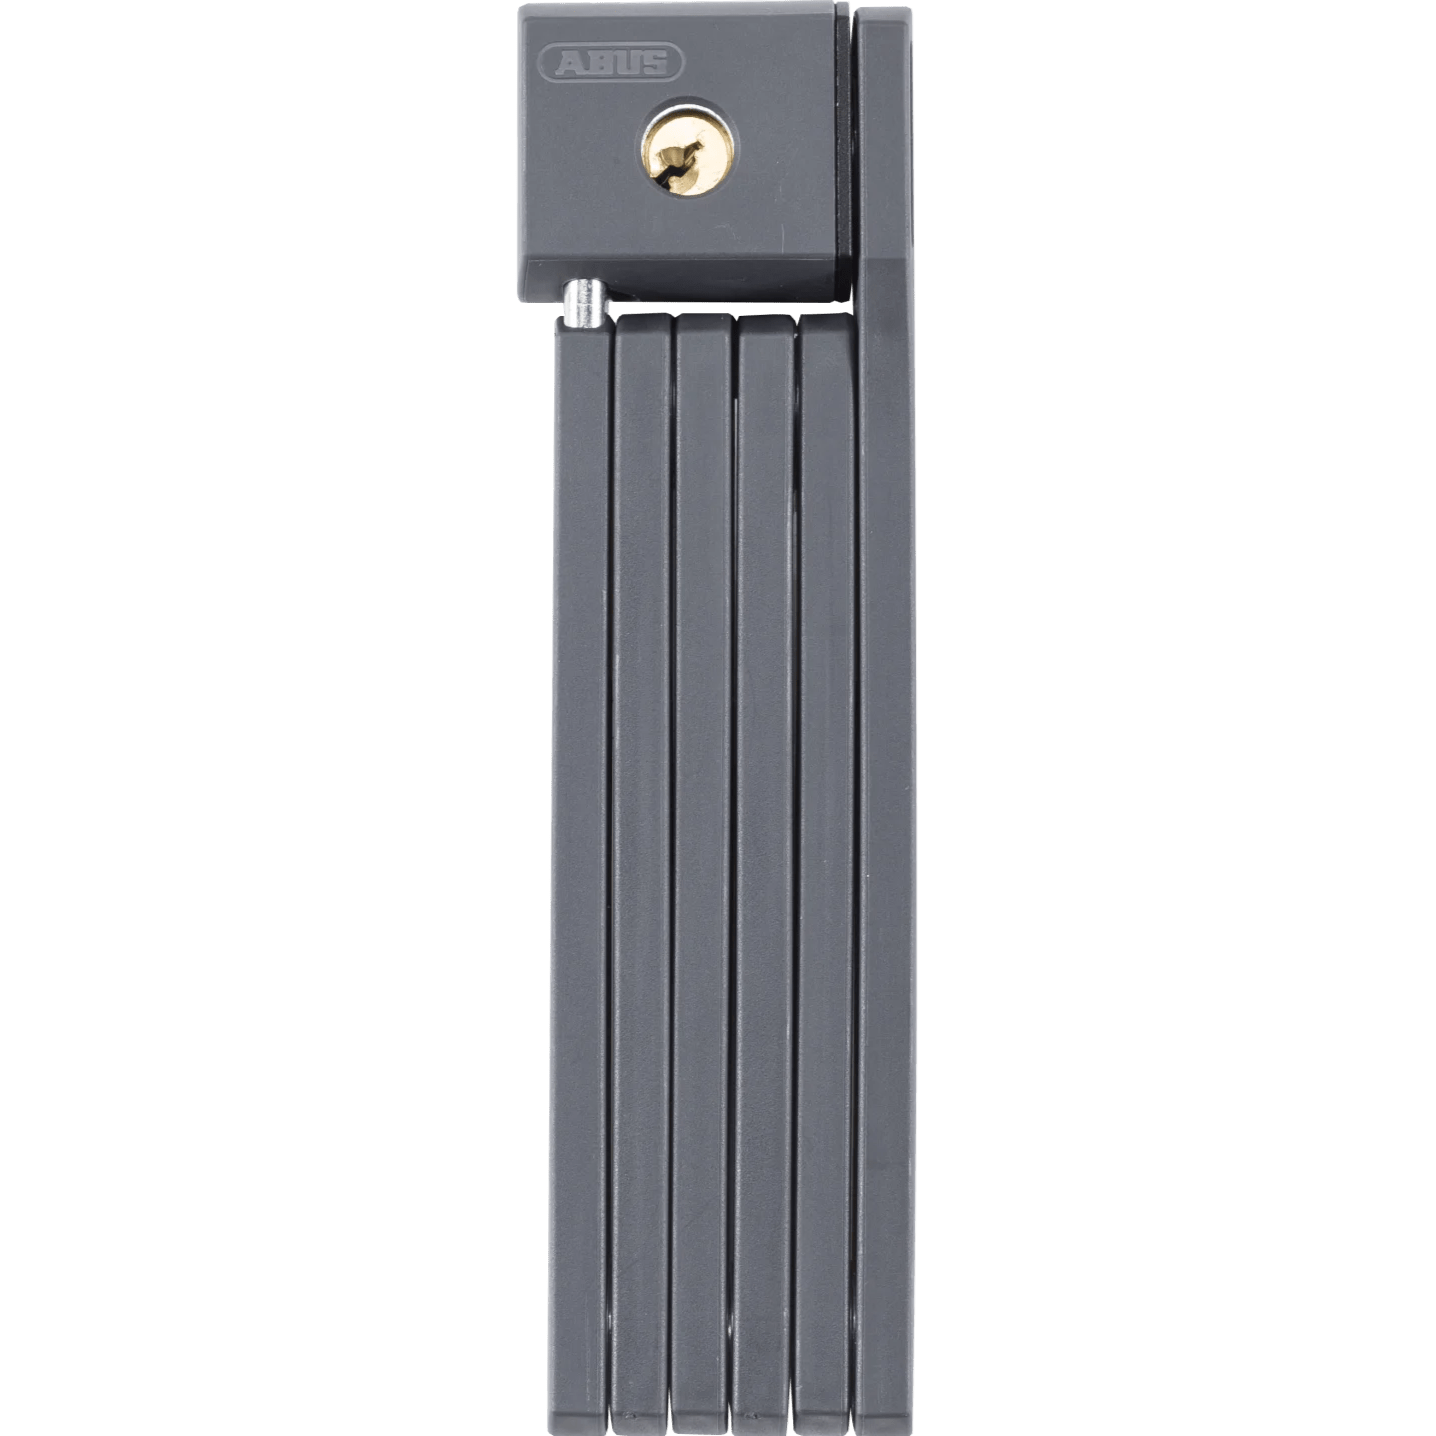 Bontrager Elite Keyed Folding Lock Accessories - Locks